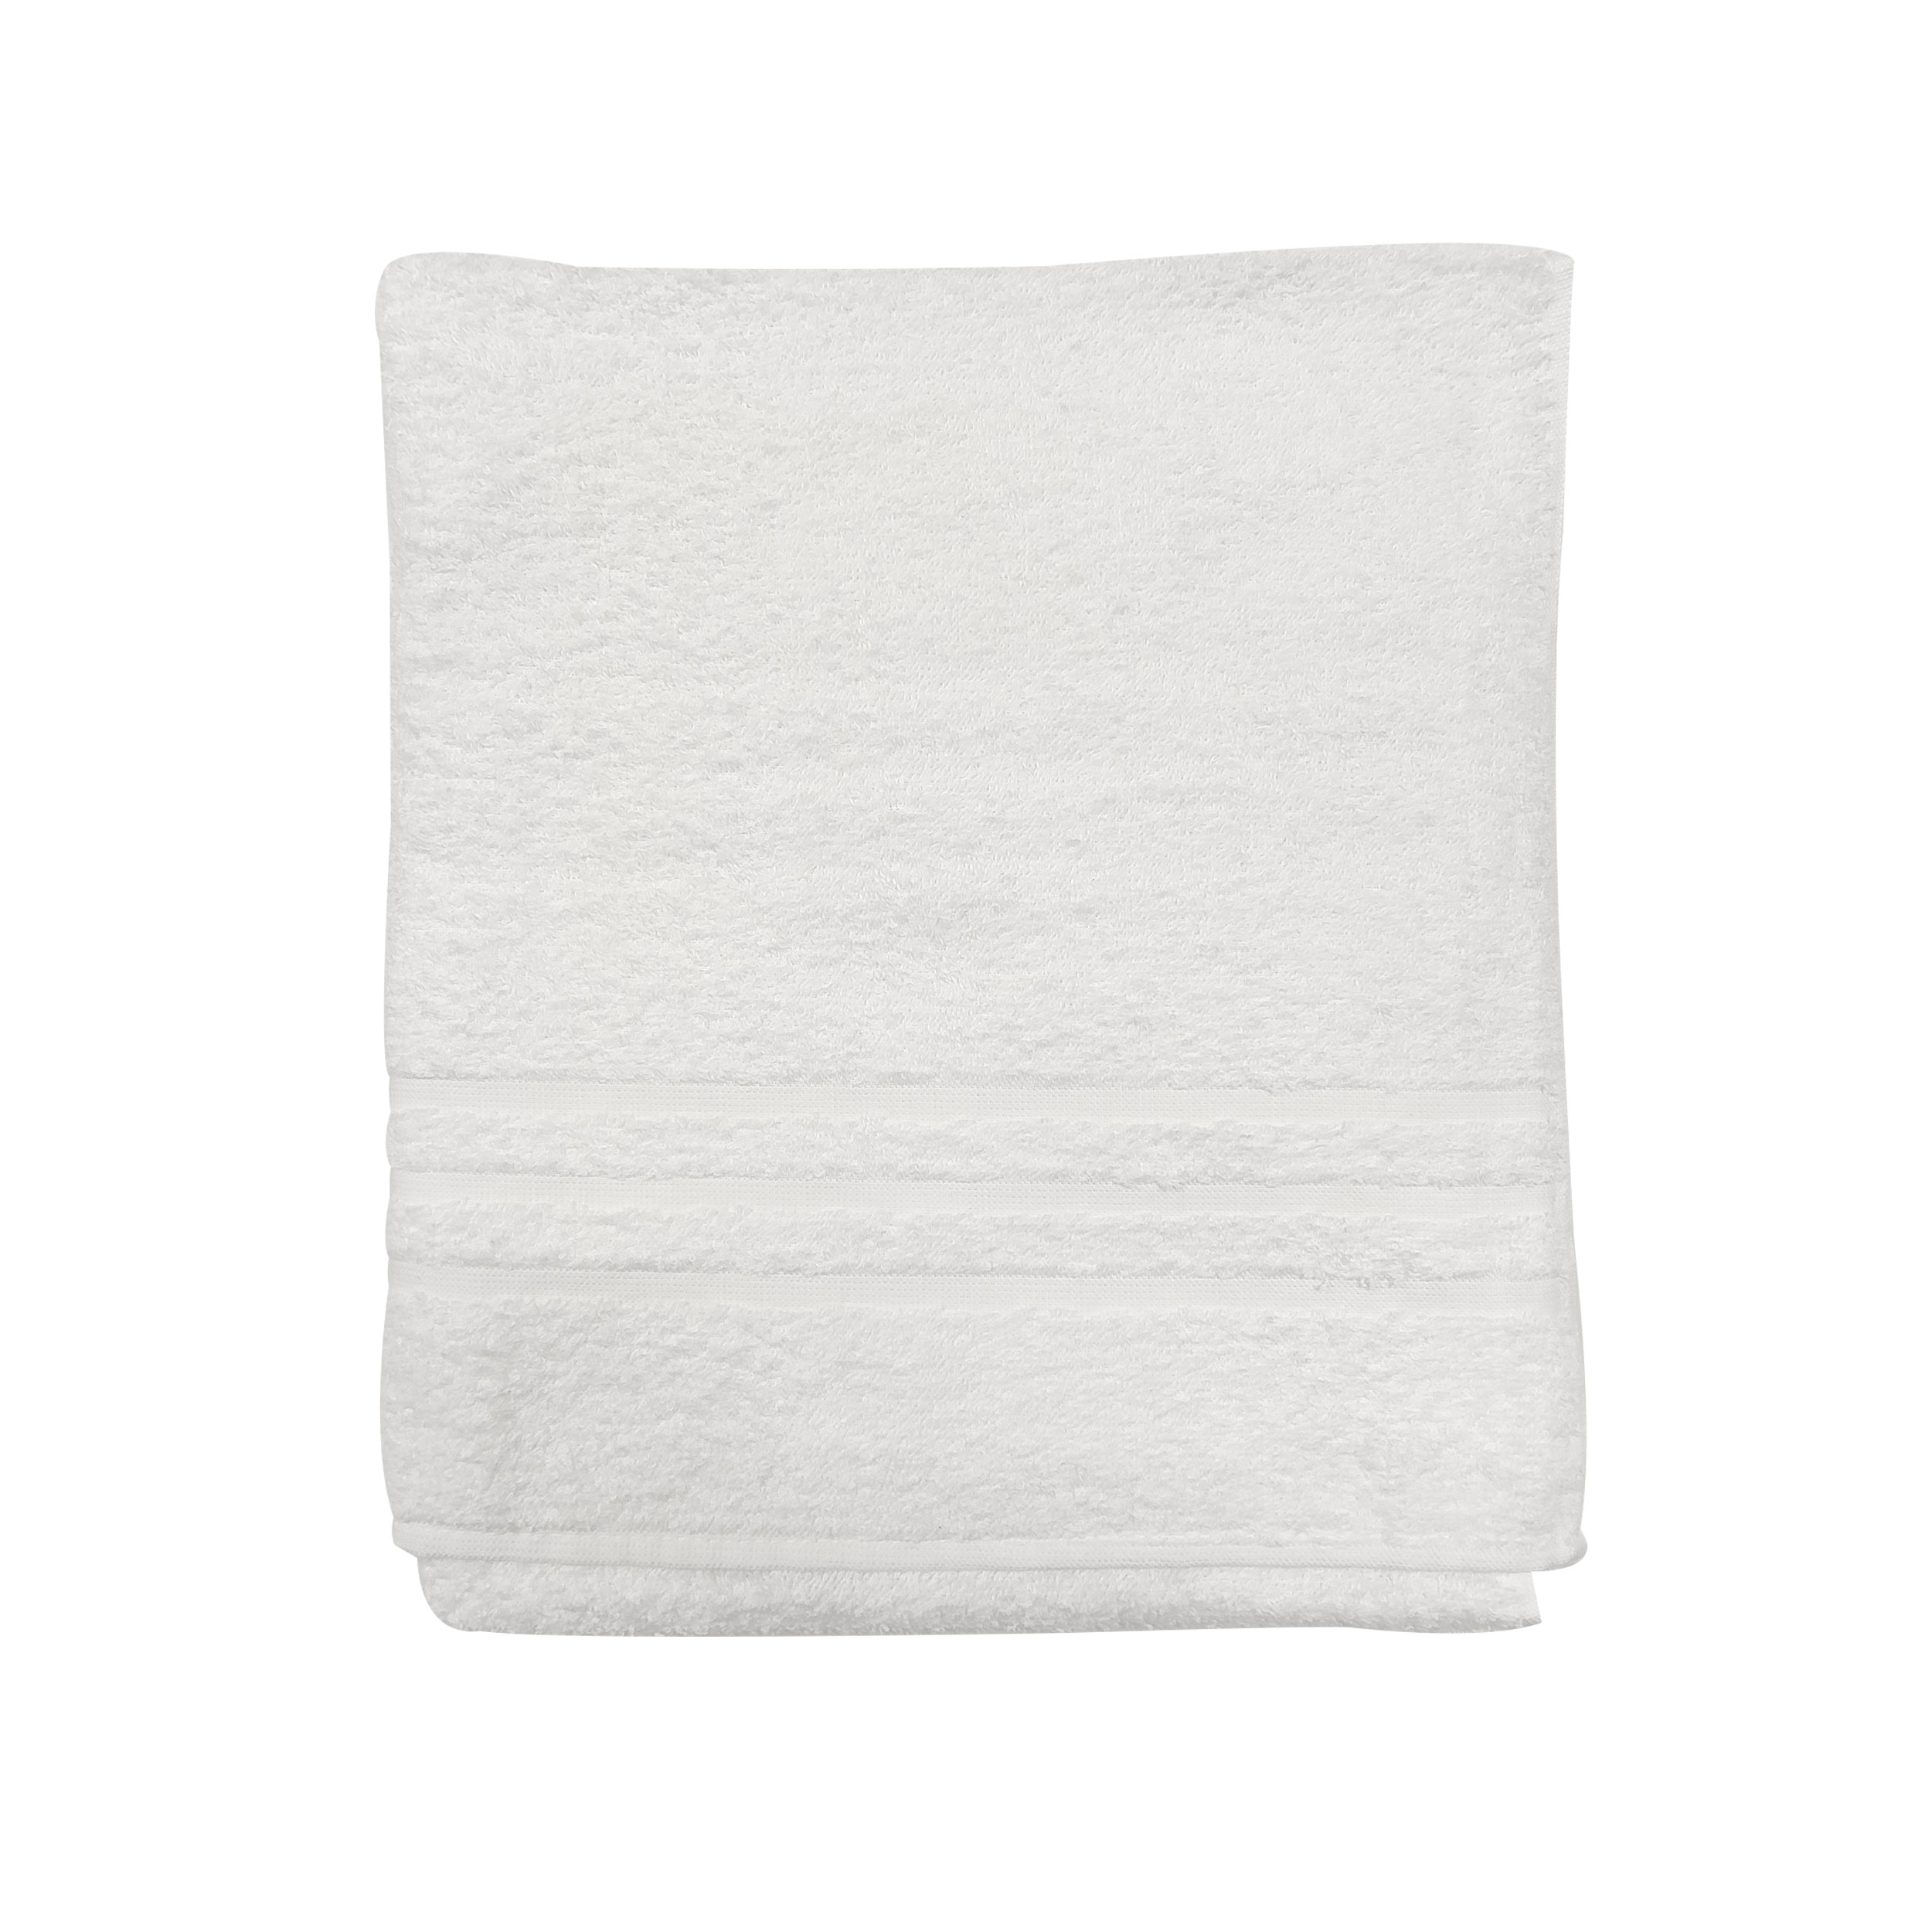 biancheria-panini-tessuti-asciugamano-colore-bianco